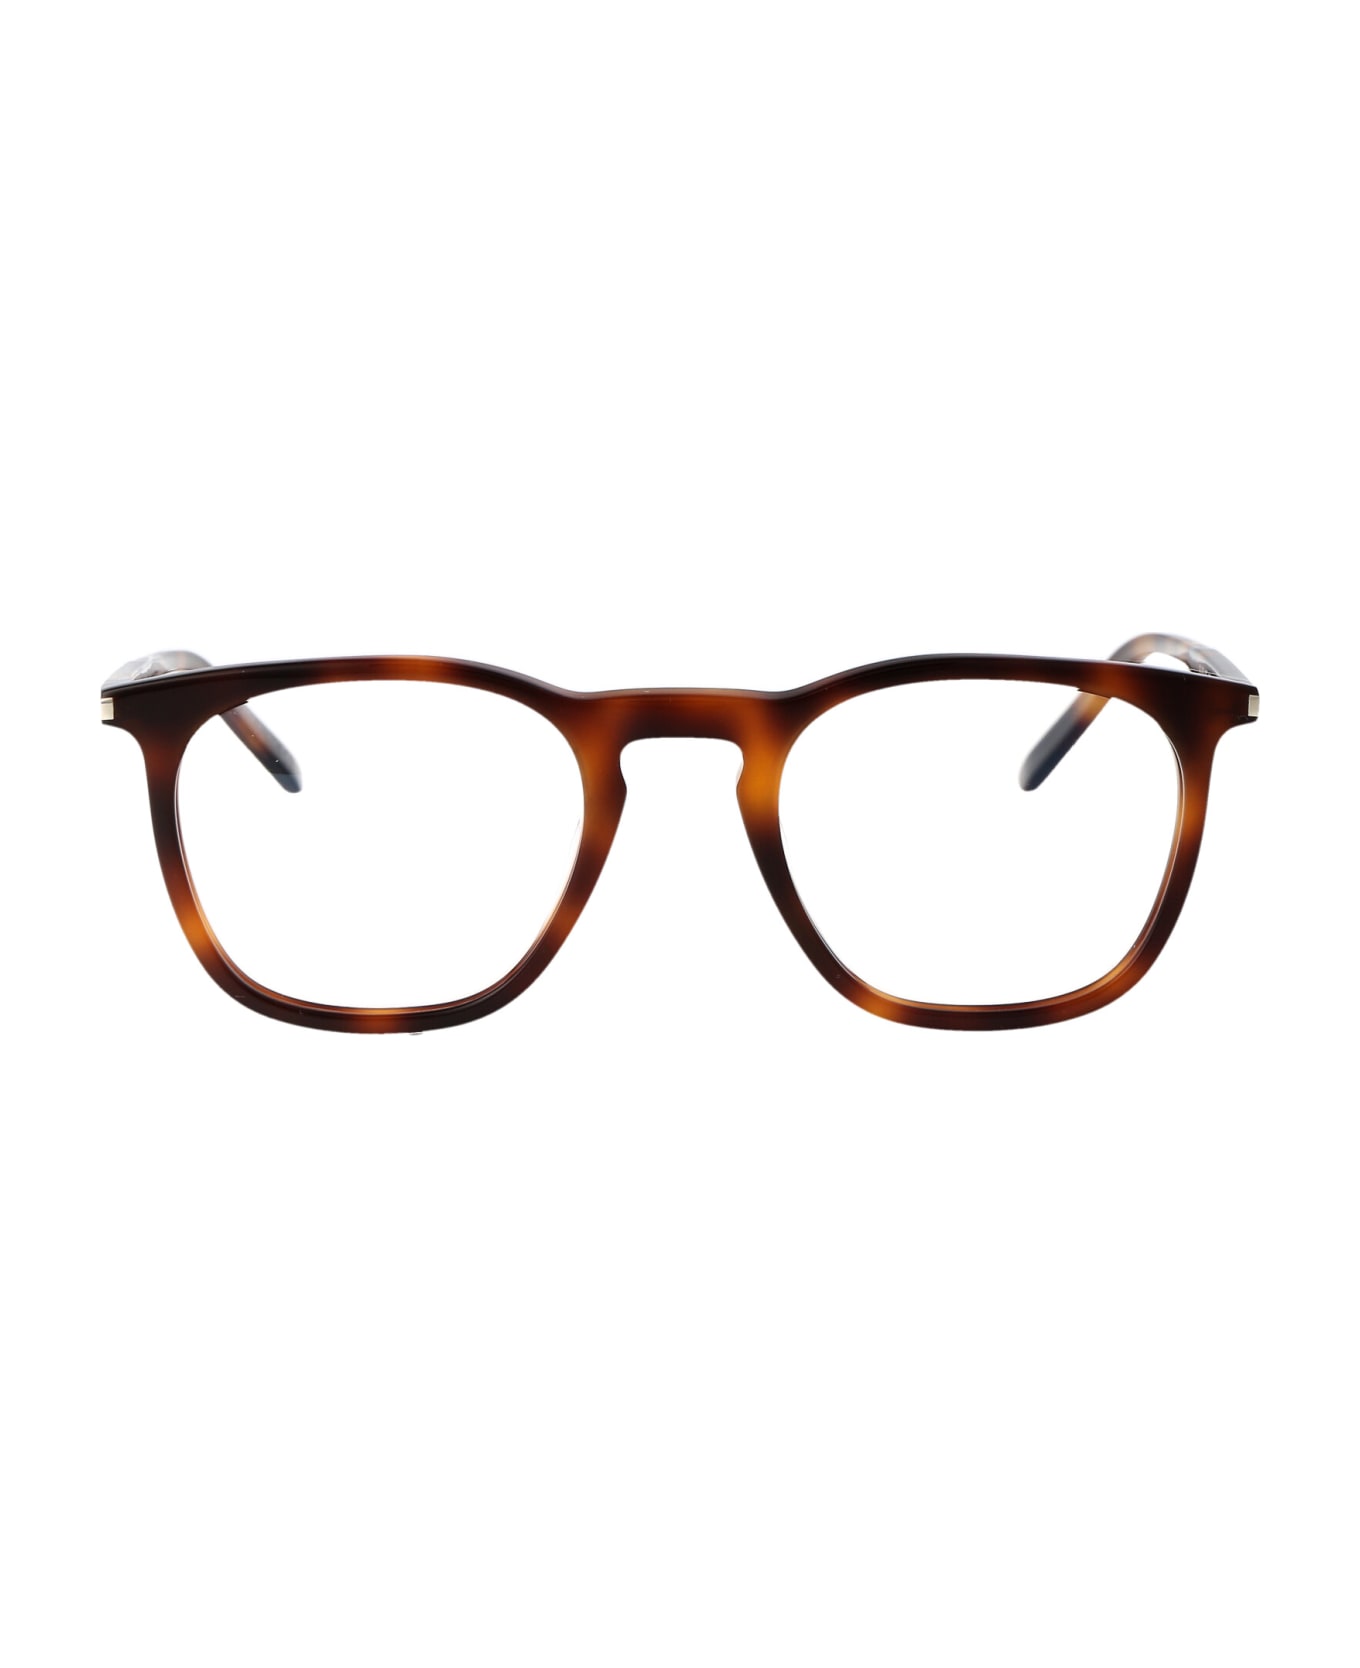 Saint Laurent Eyewear Sl 623 Opt Glasses - 003 HAVANA HAVANA TRANSPARENT